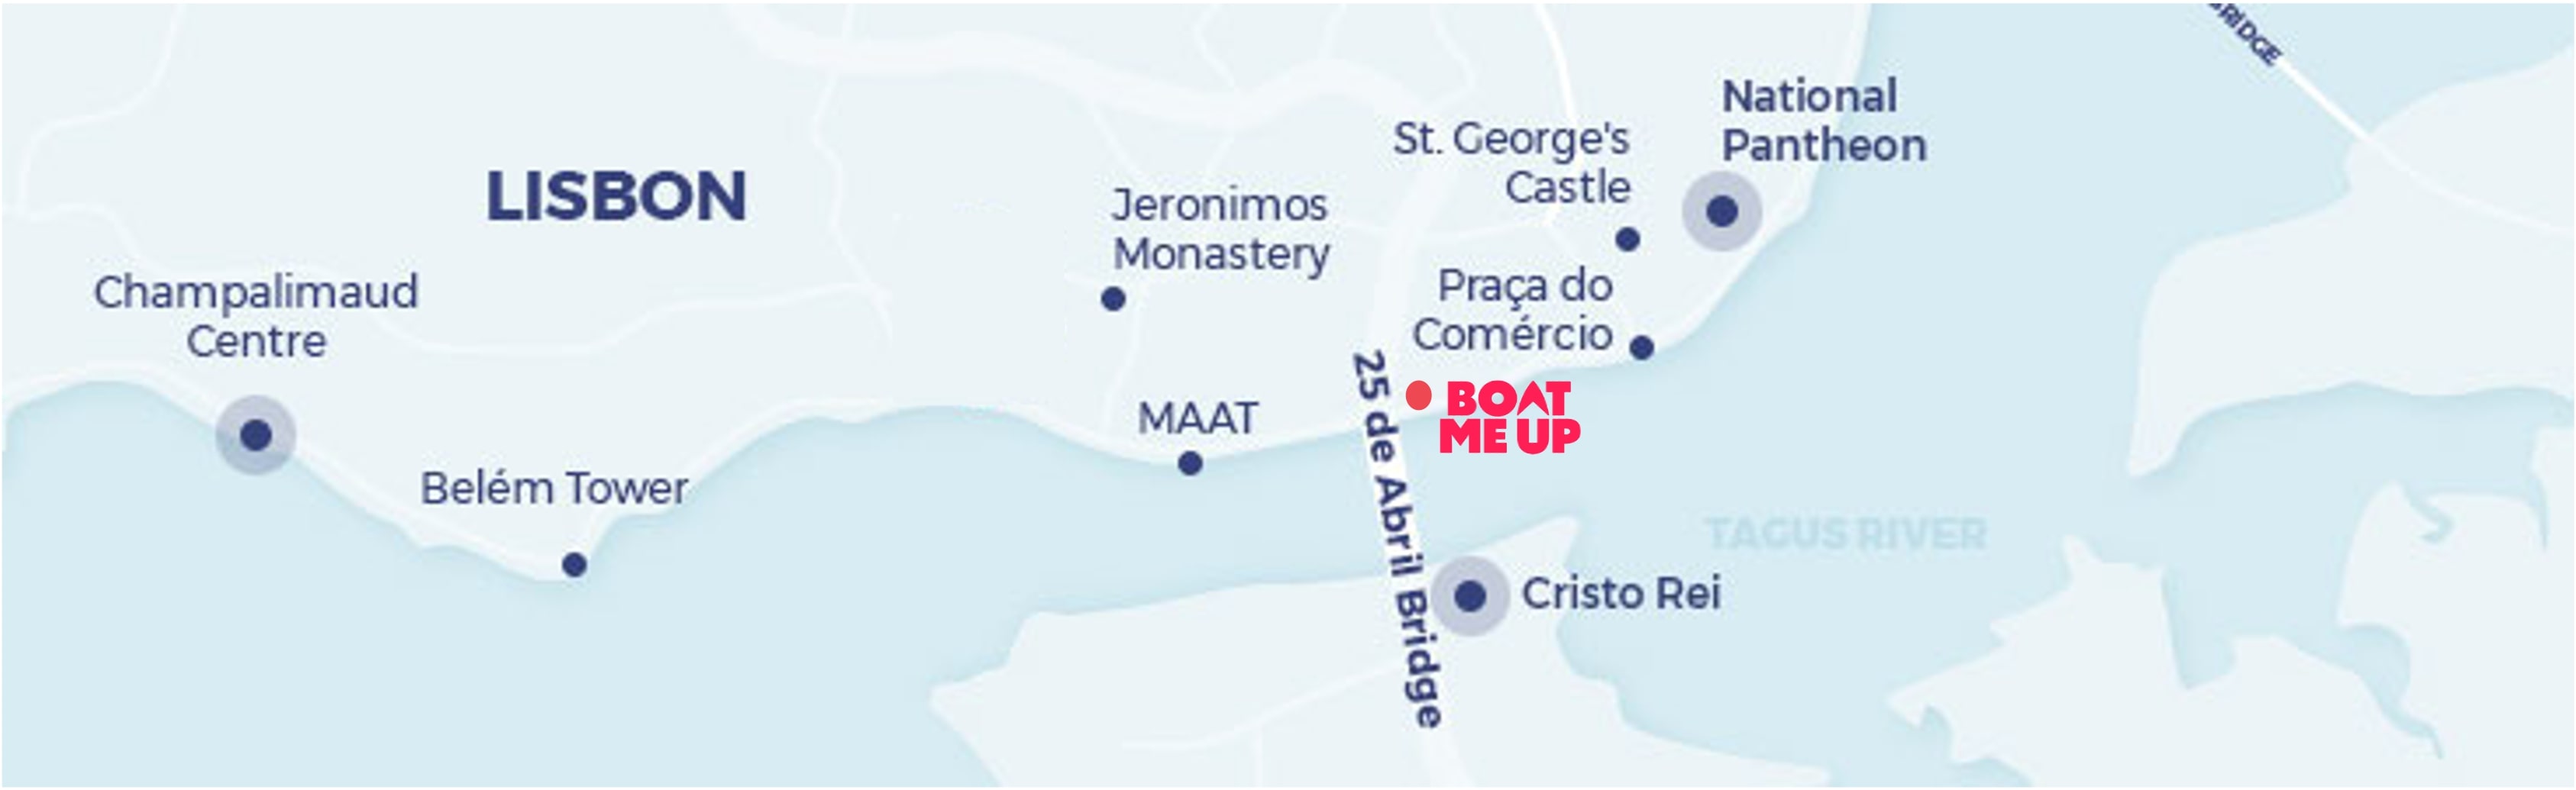 Lisbon Sightseeing tour map